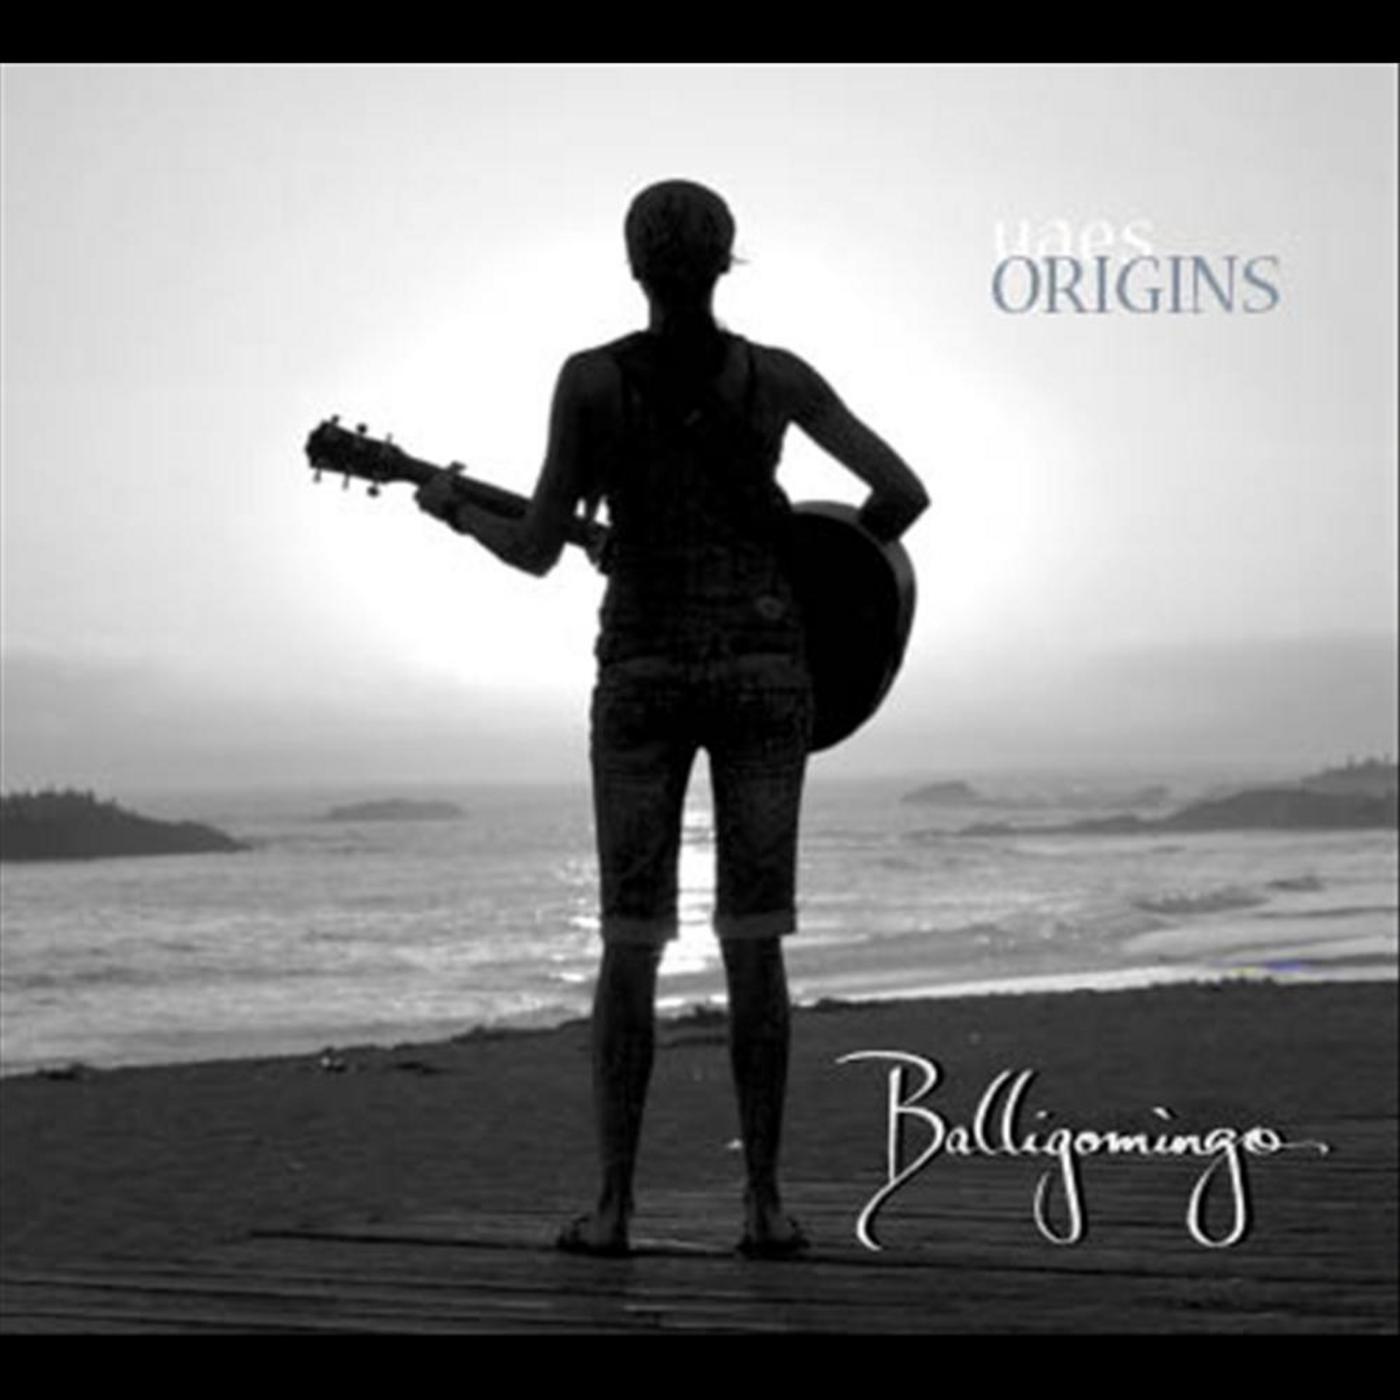 Balligomingo - You're a Star (Acoustic Mix)